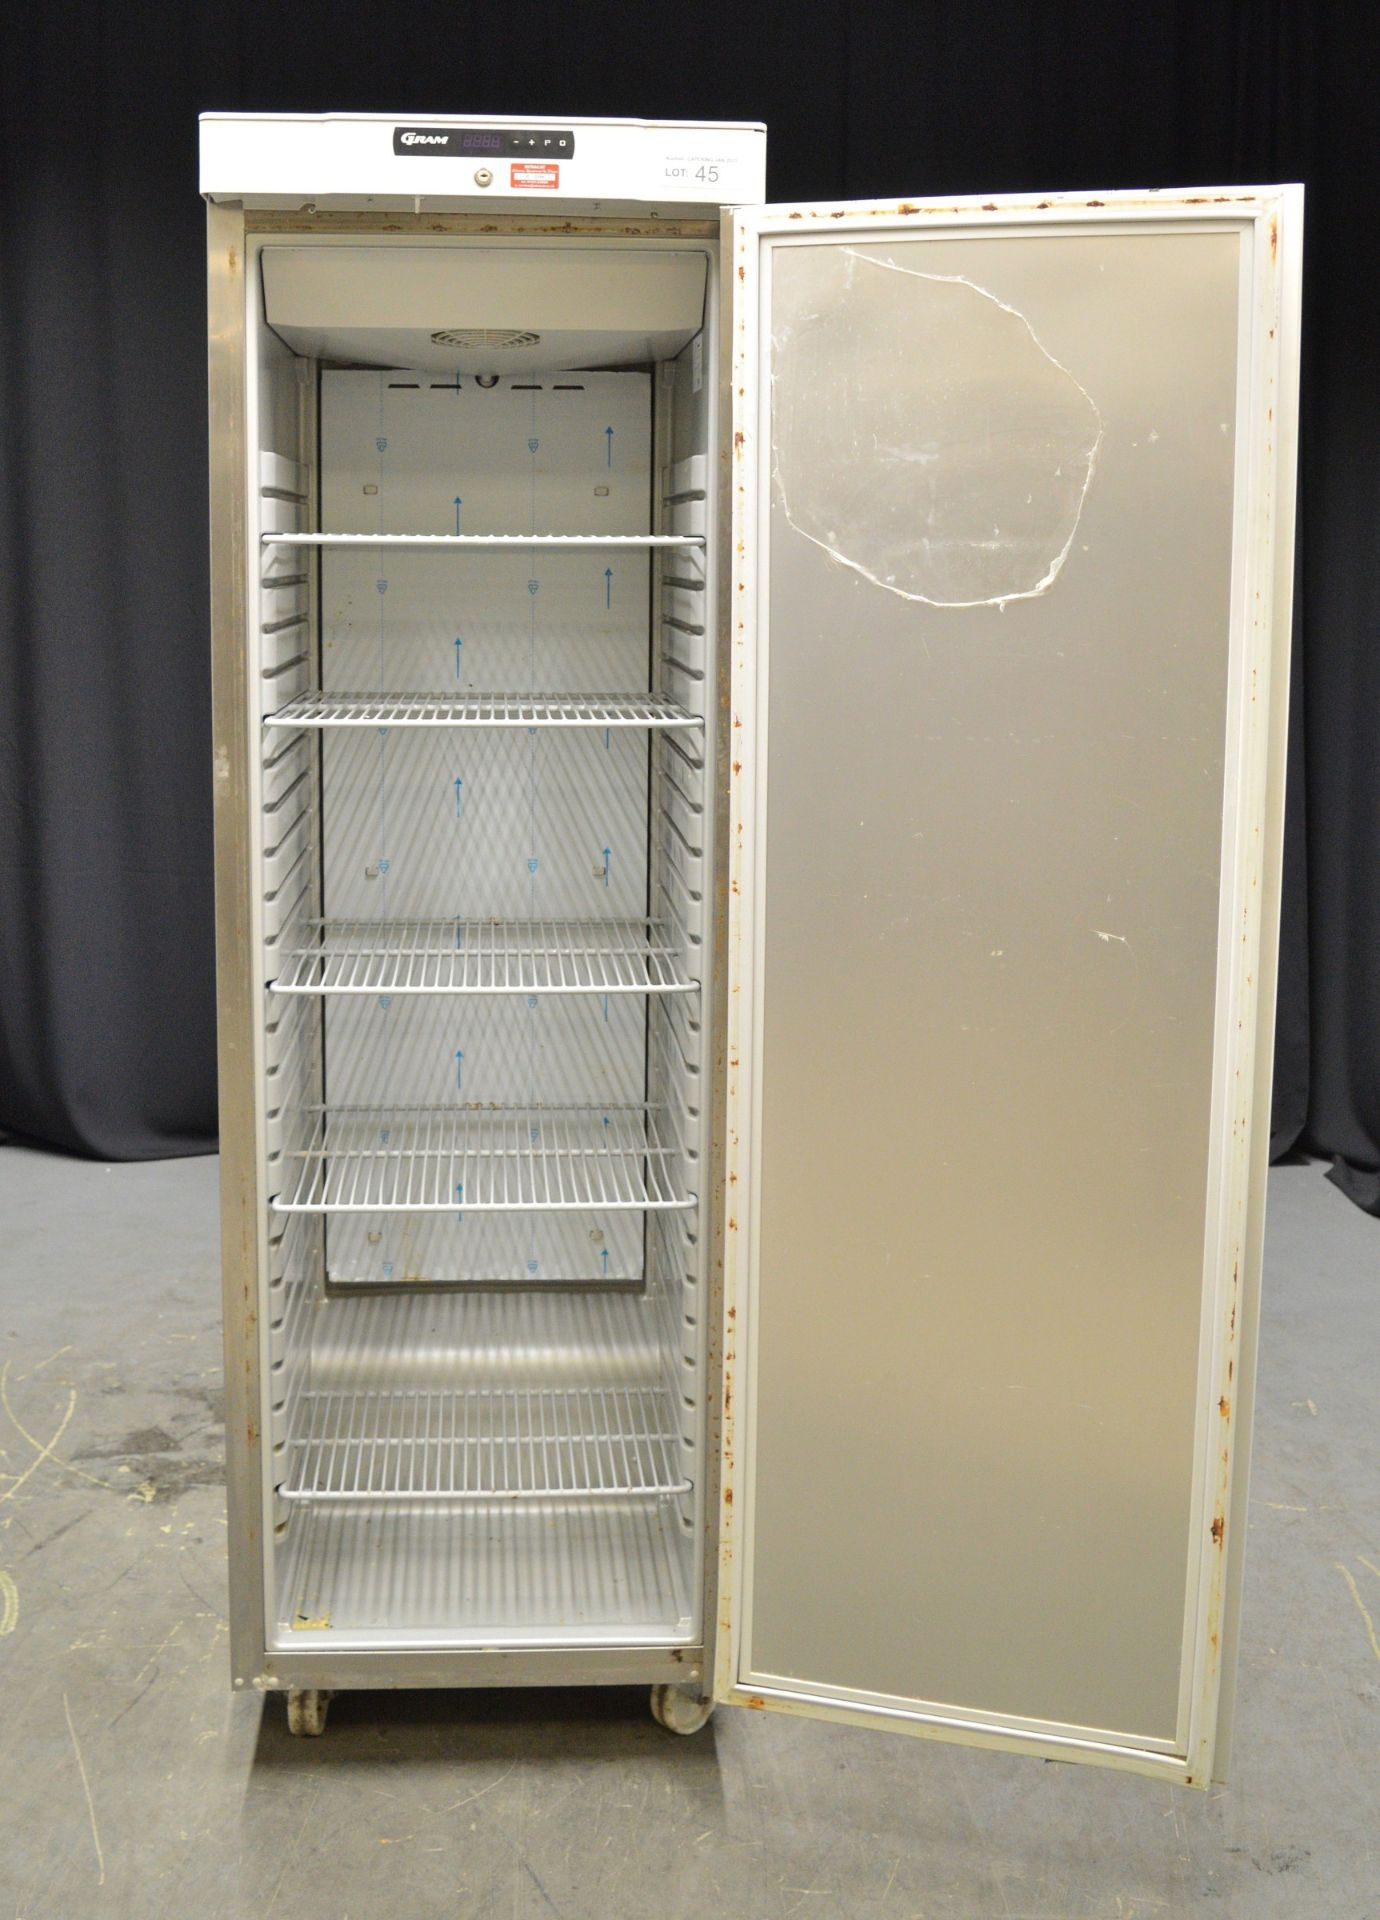 Gram K410 RG C 6N Stainless Steel Upright Refrigerator - Image 4 of 7